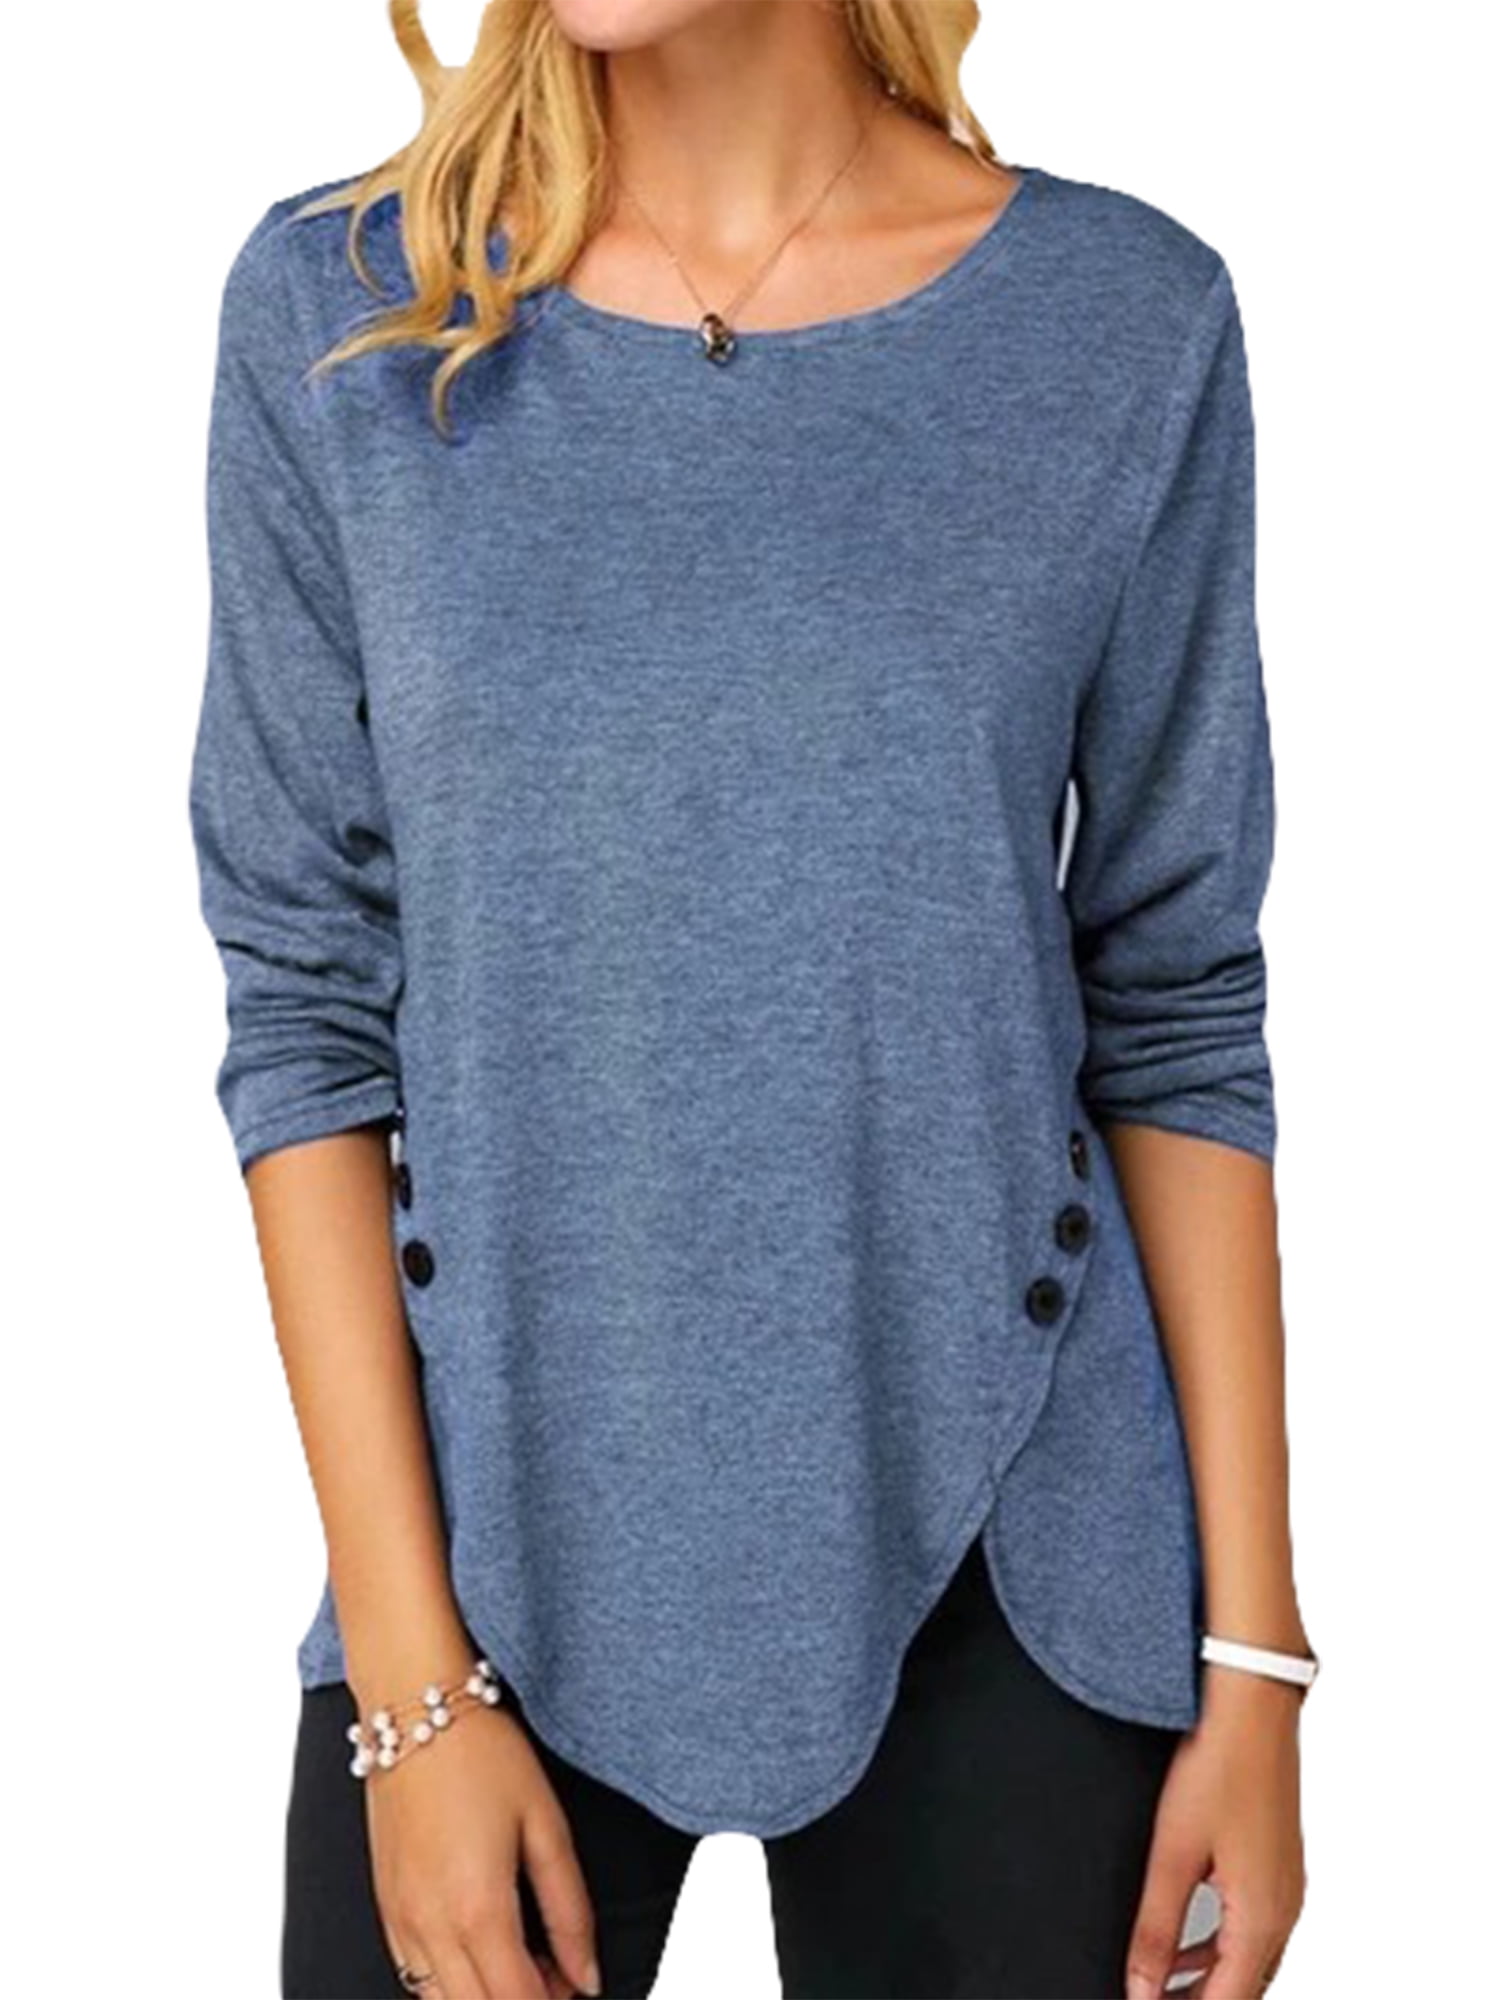 M, Light Blue 4 Swing Blouse Plus Size for Women Fashion Summer Print T-Shirt Irregular Hem Loose Dress Top 